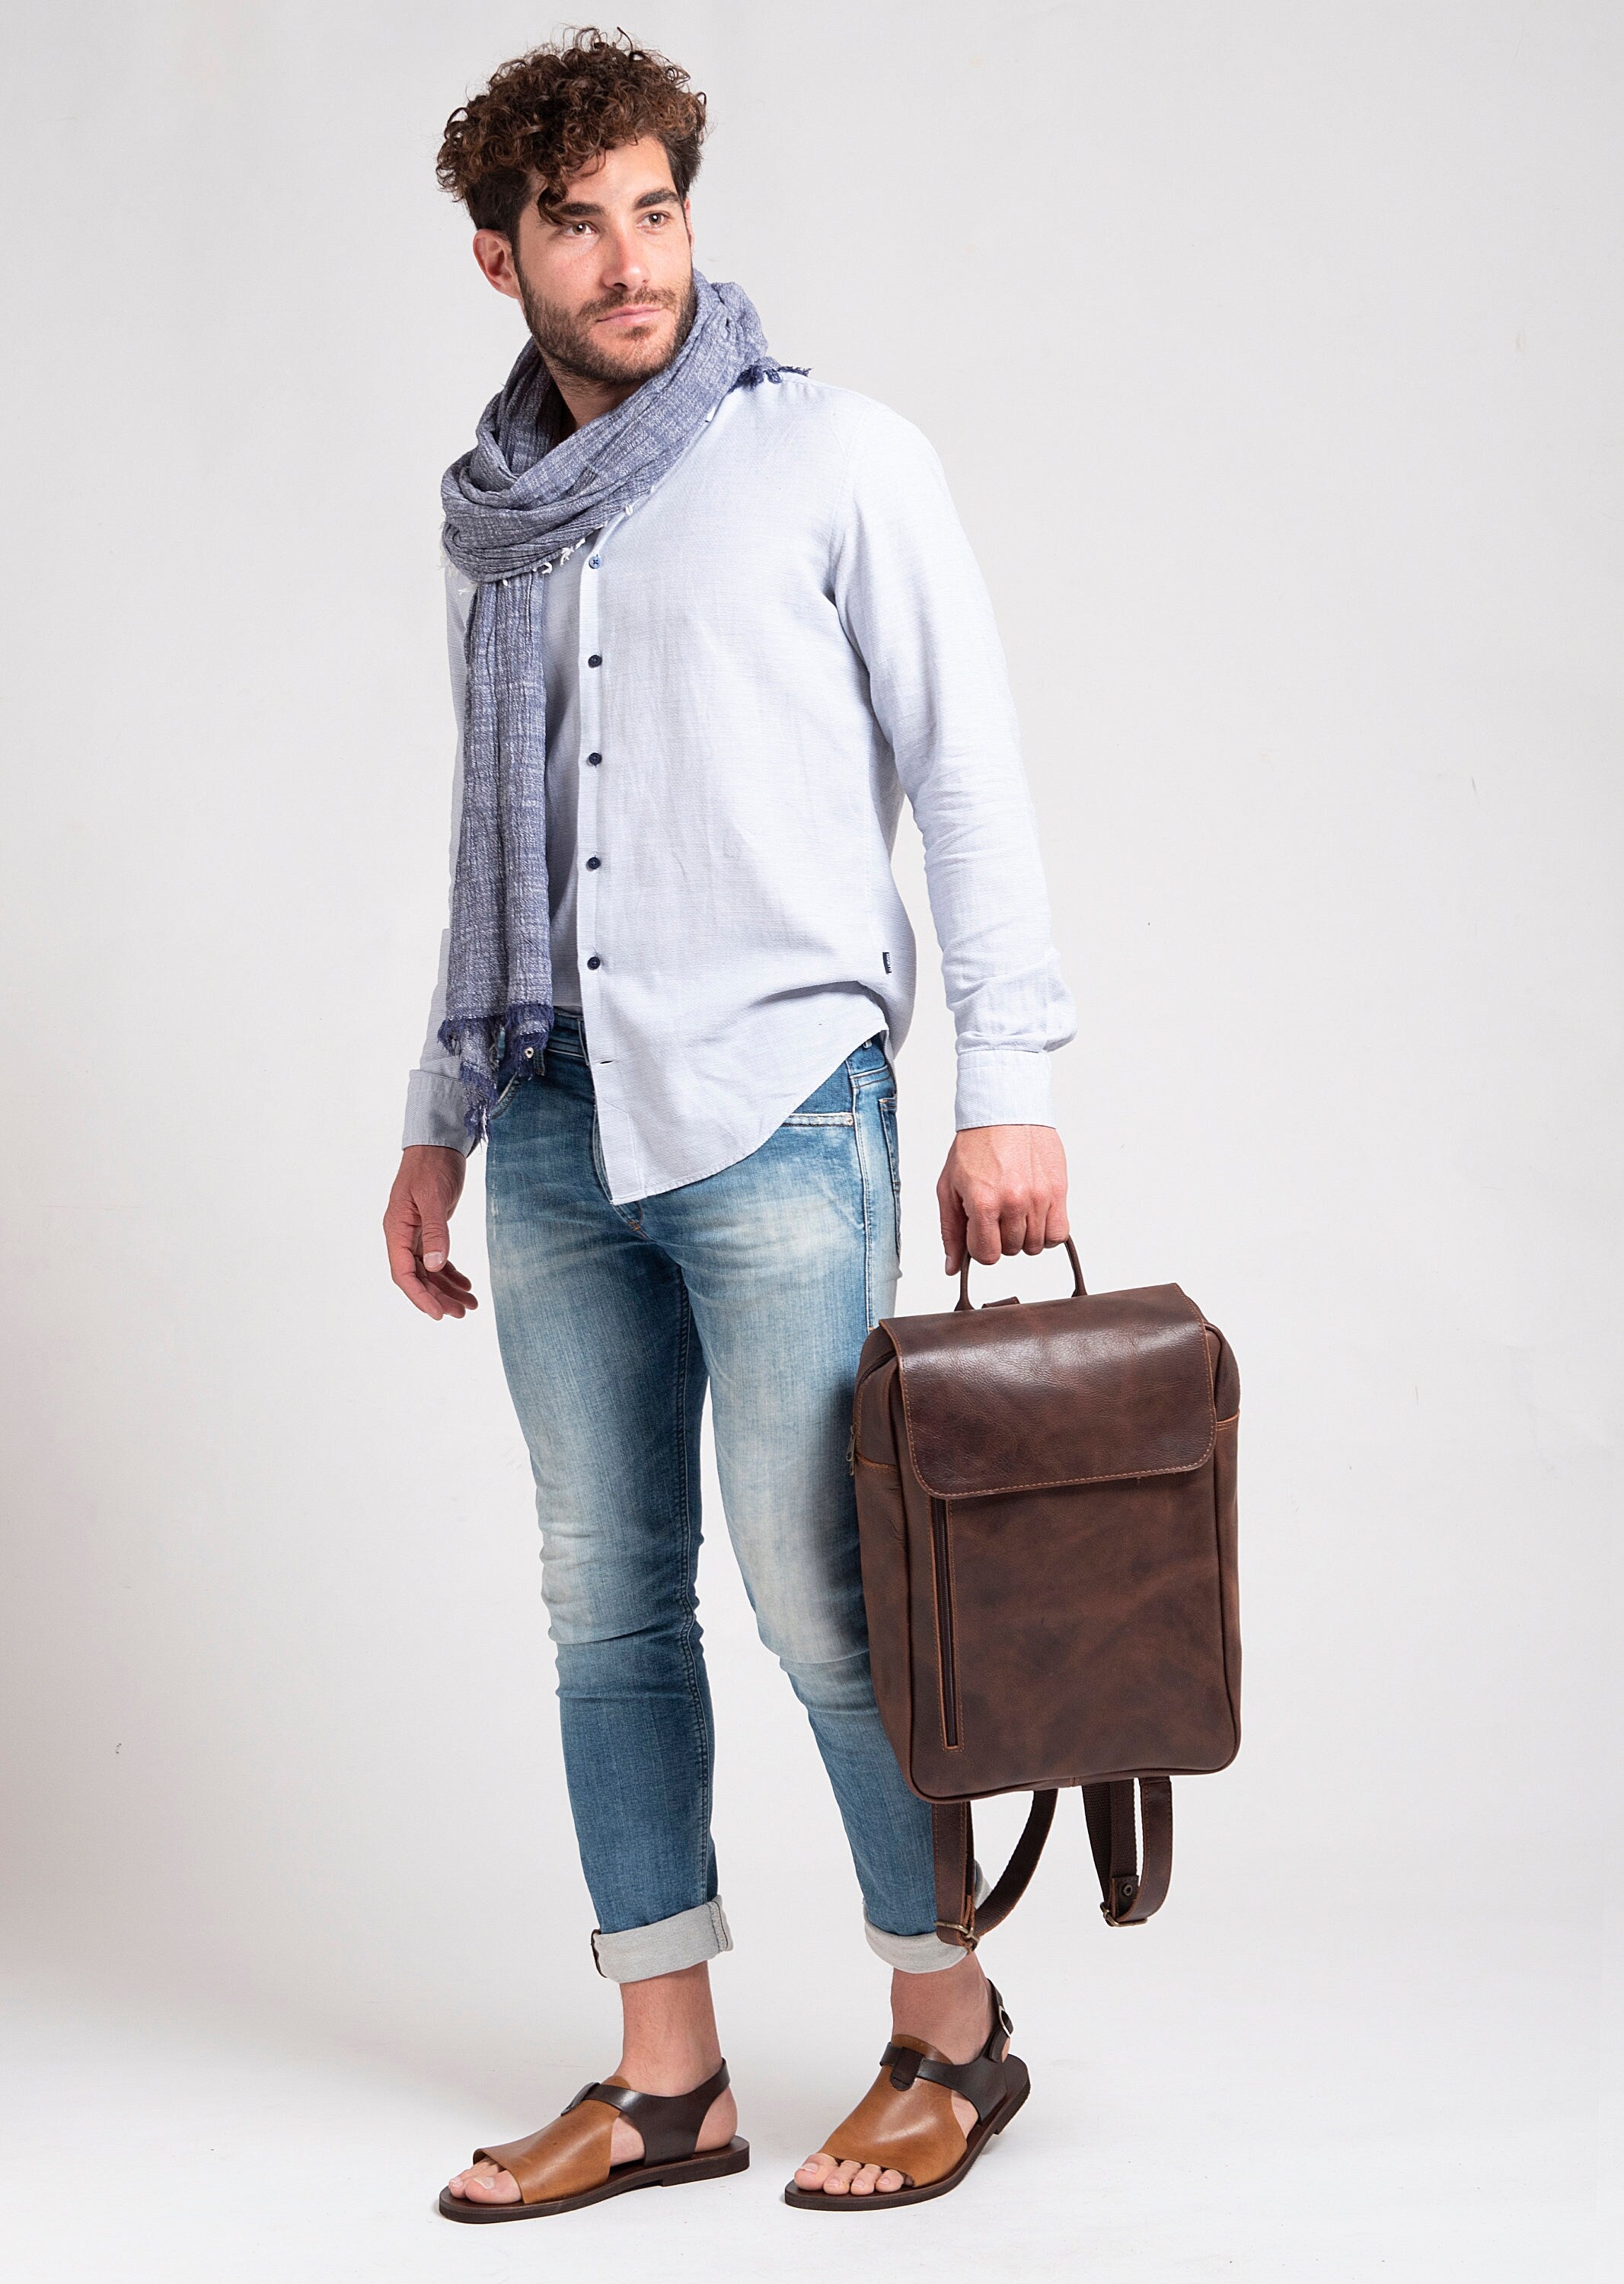 BROWN LEATHER BACKPACK mens leather rucksack, 15"laptop bag, leather backpack men women genuine leather vintage style